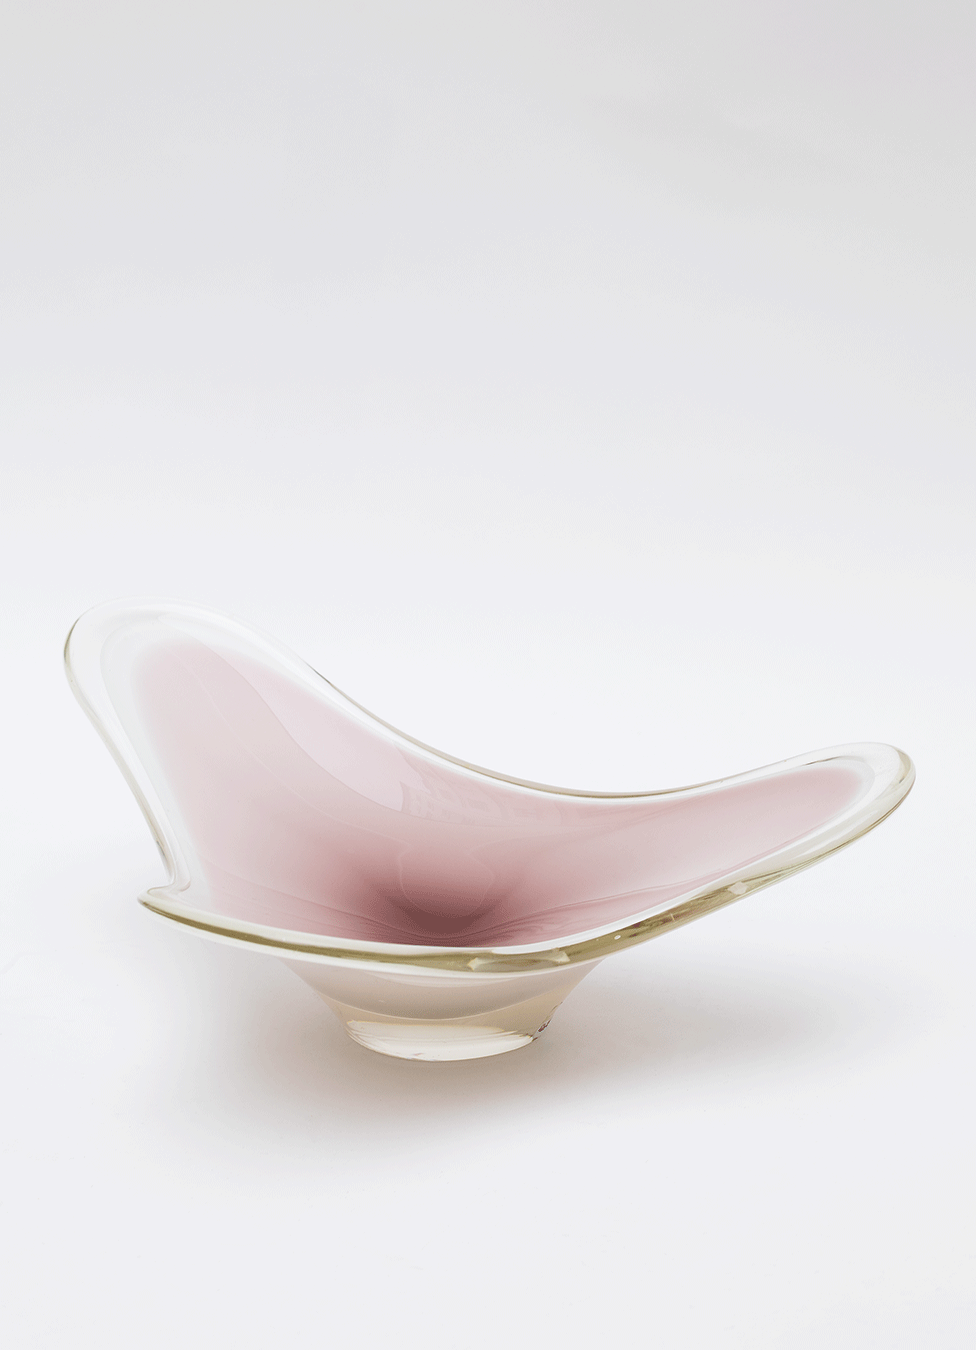 Vintage 1960s Handblown Glass Fruit Bowl